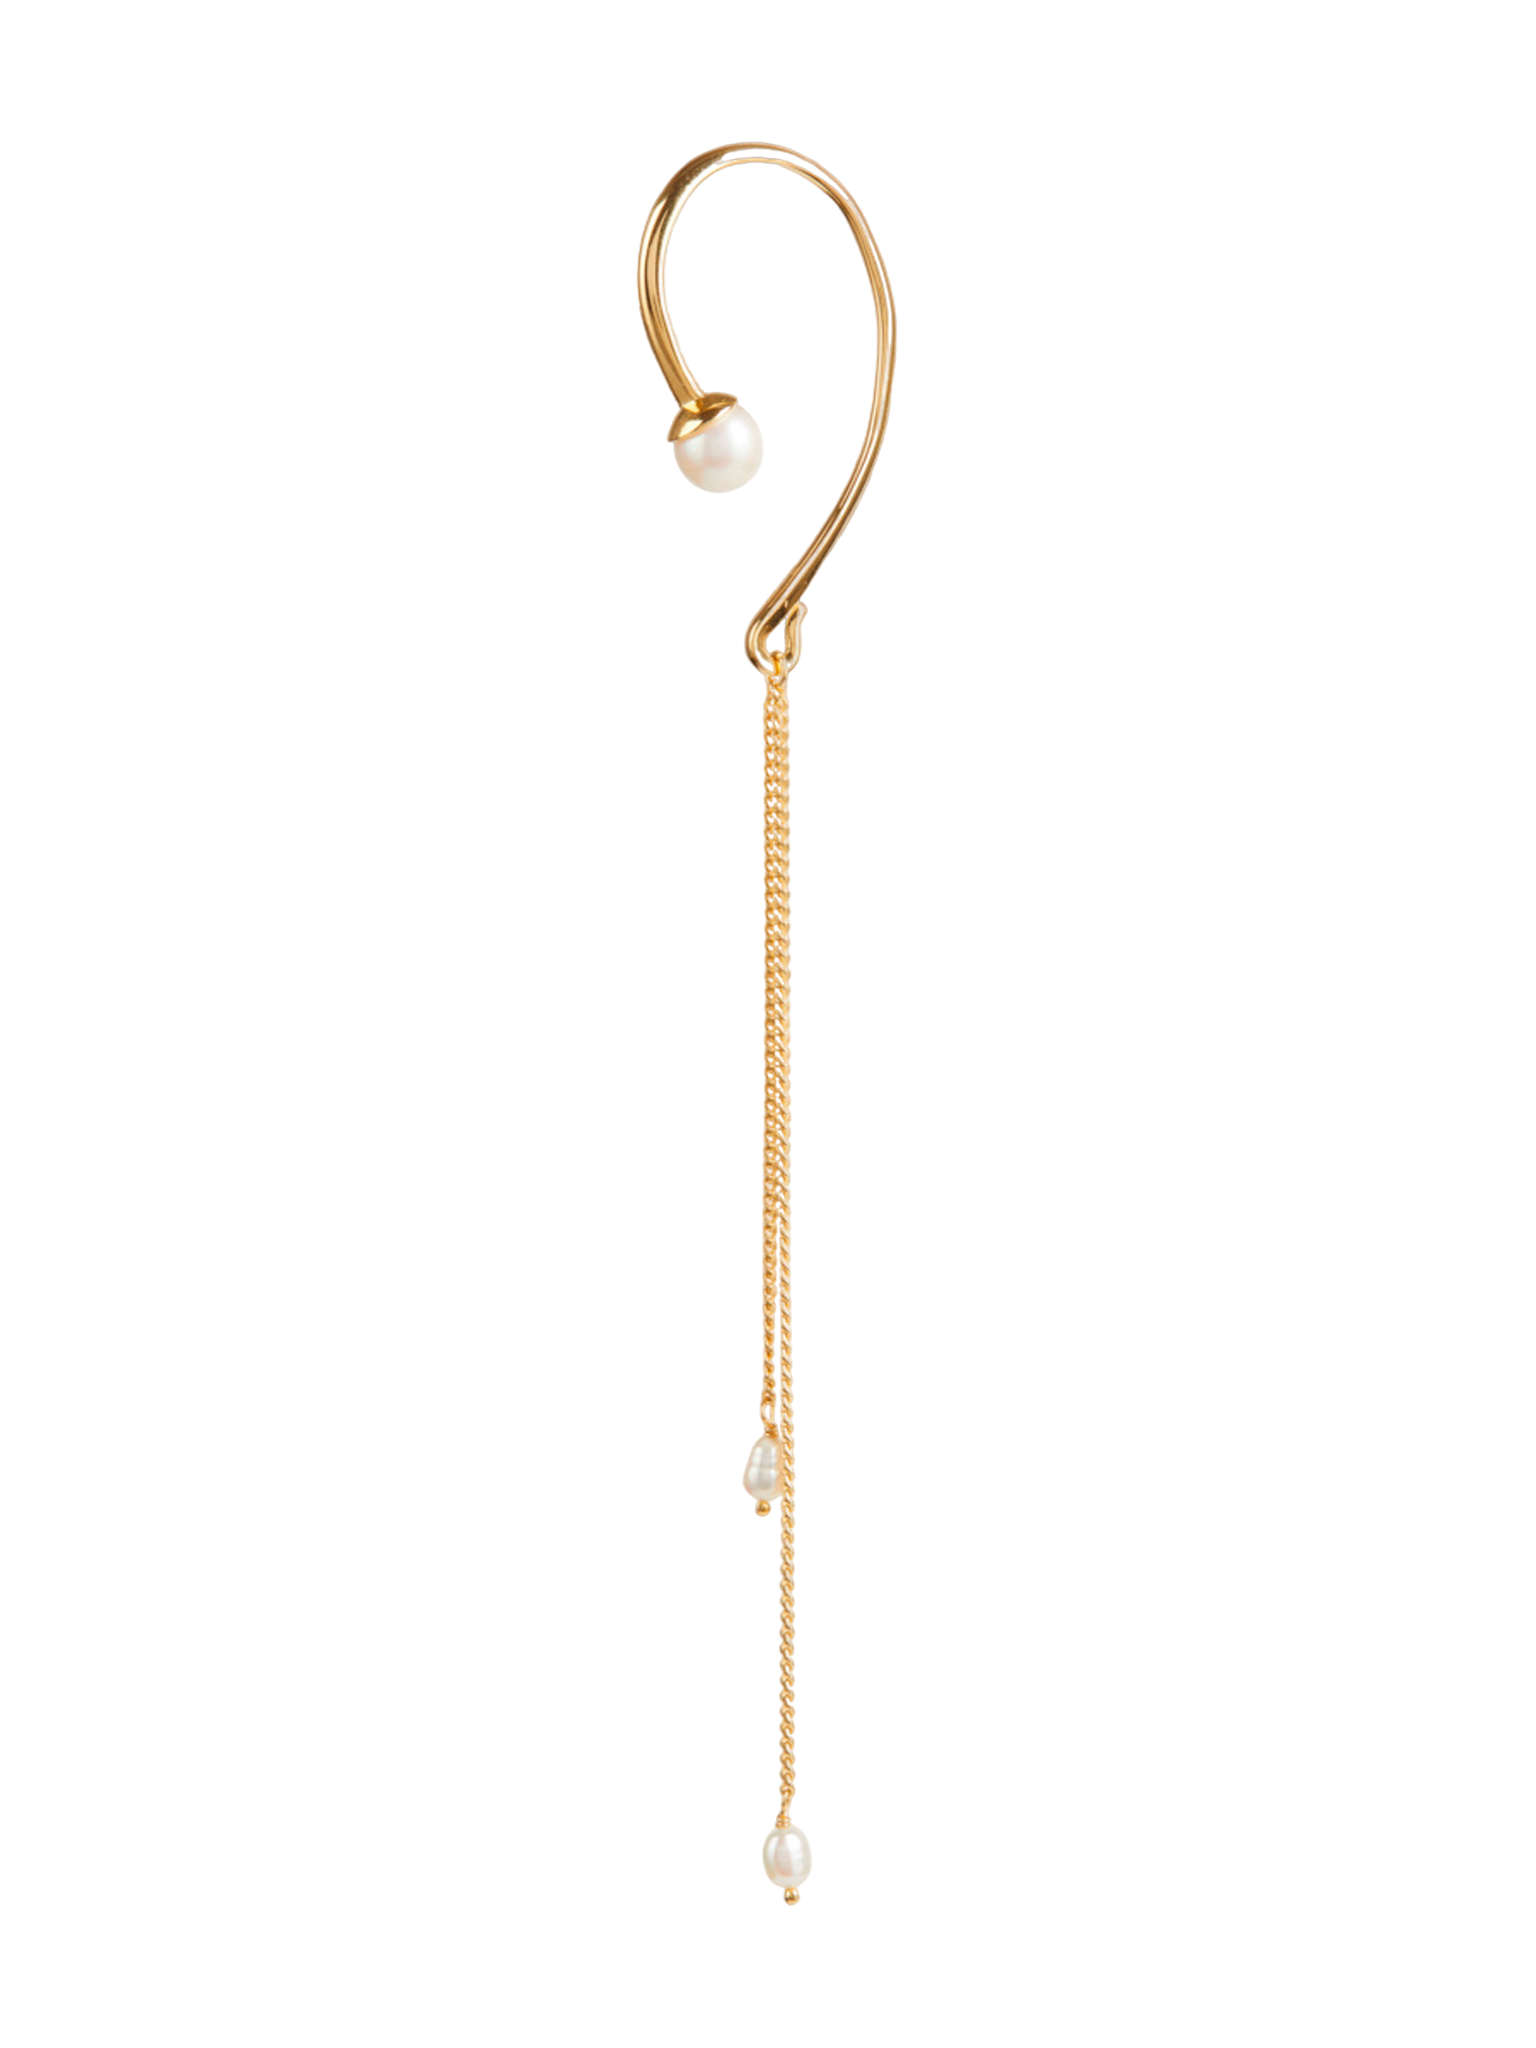 Amphi pearl gold ear cuff 